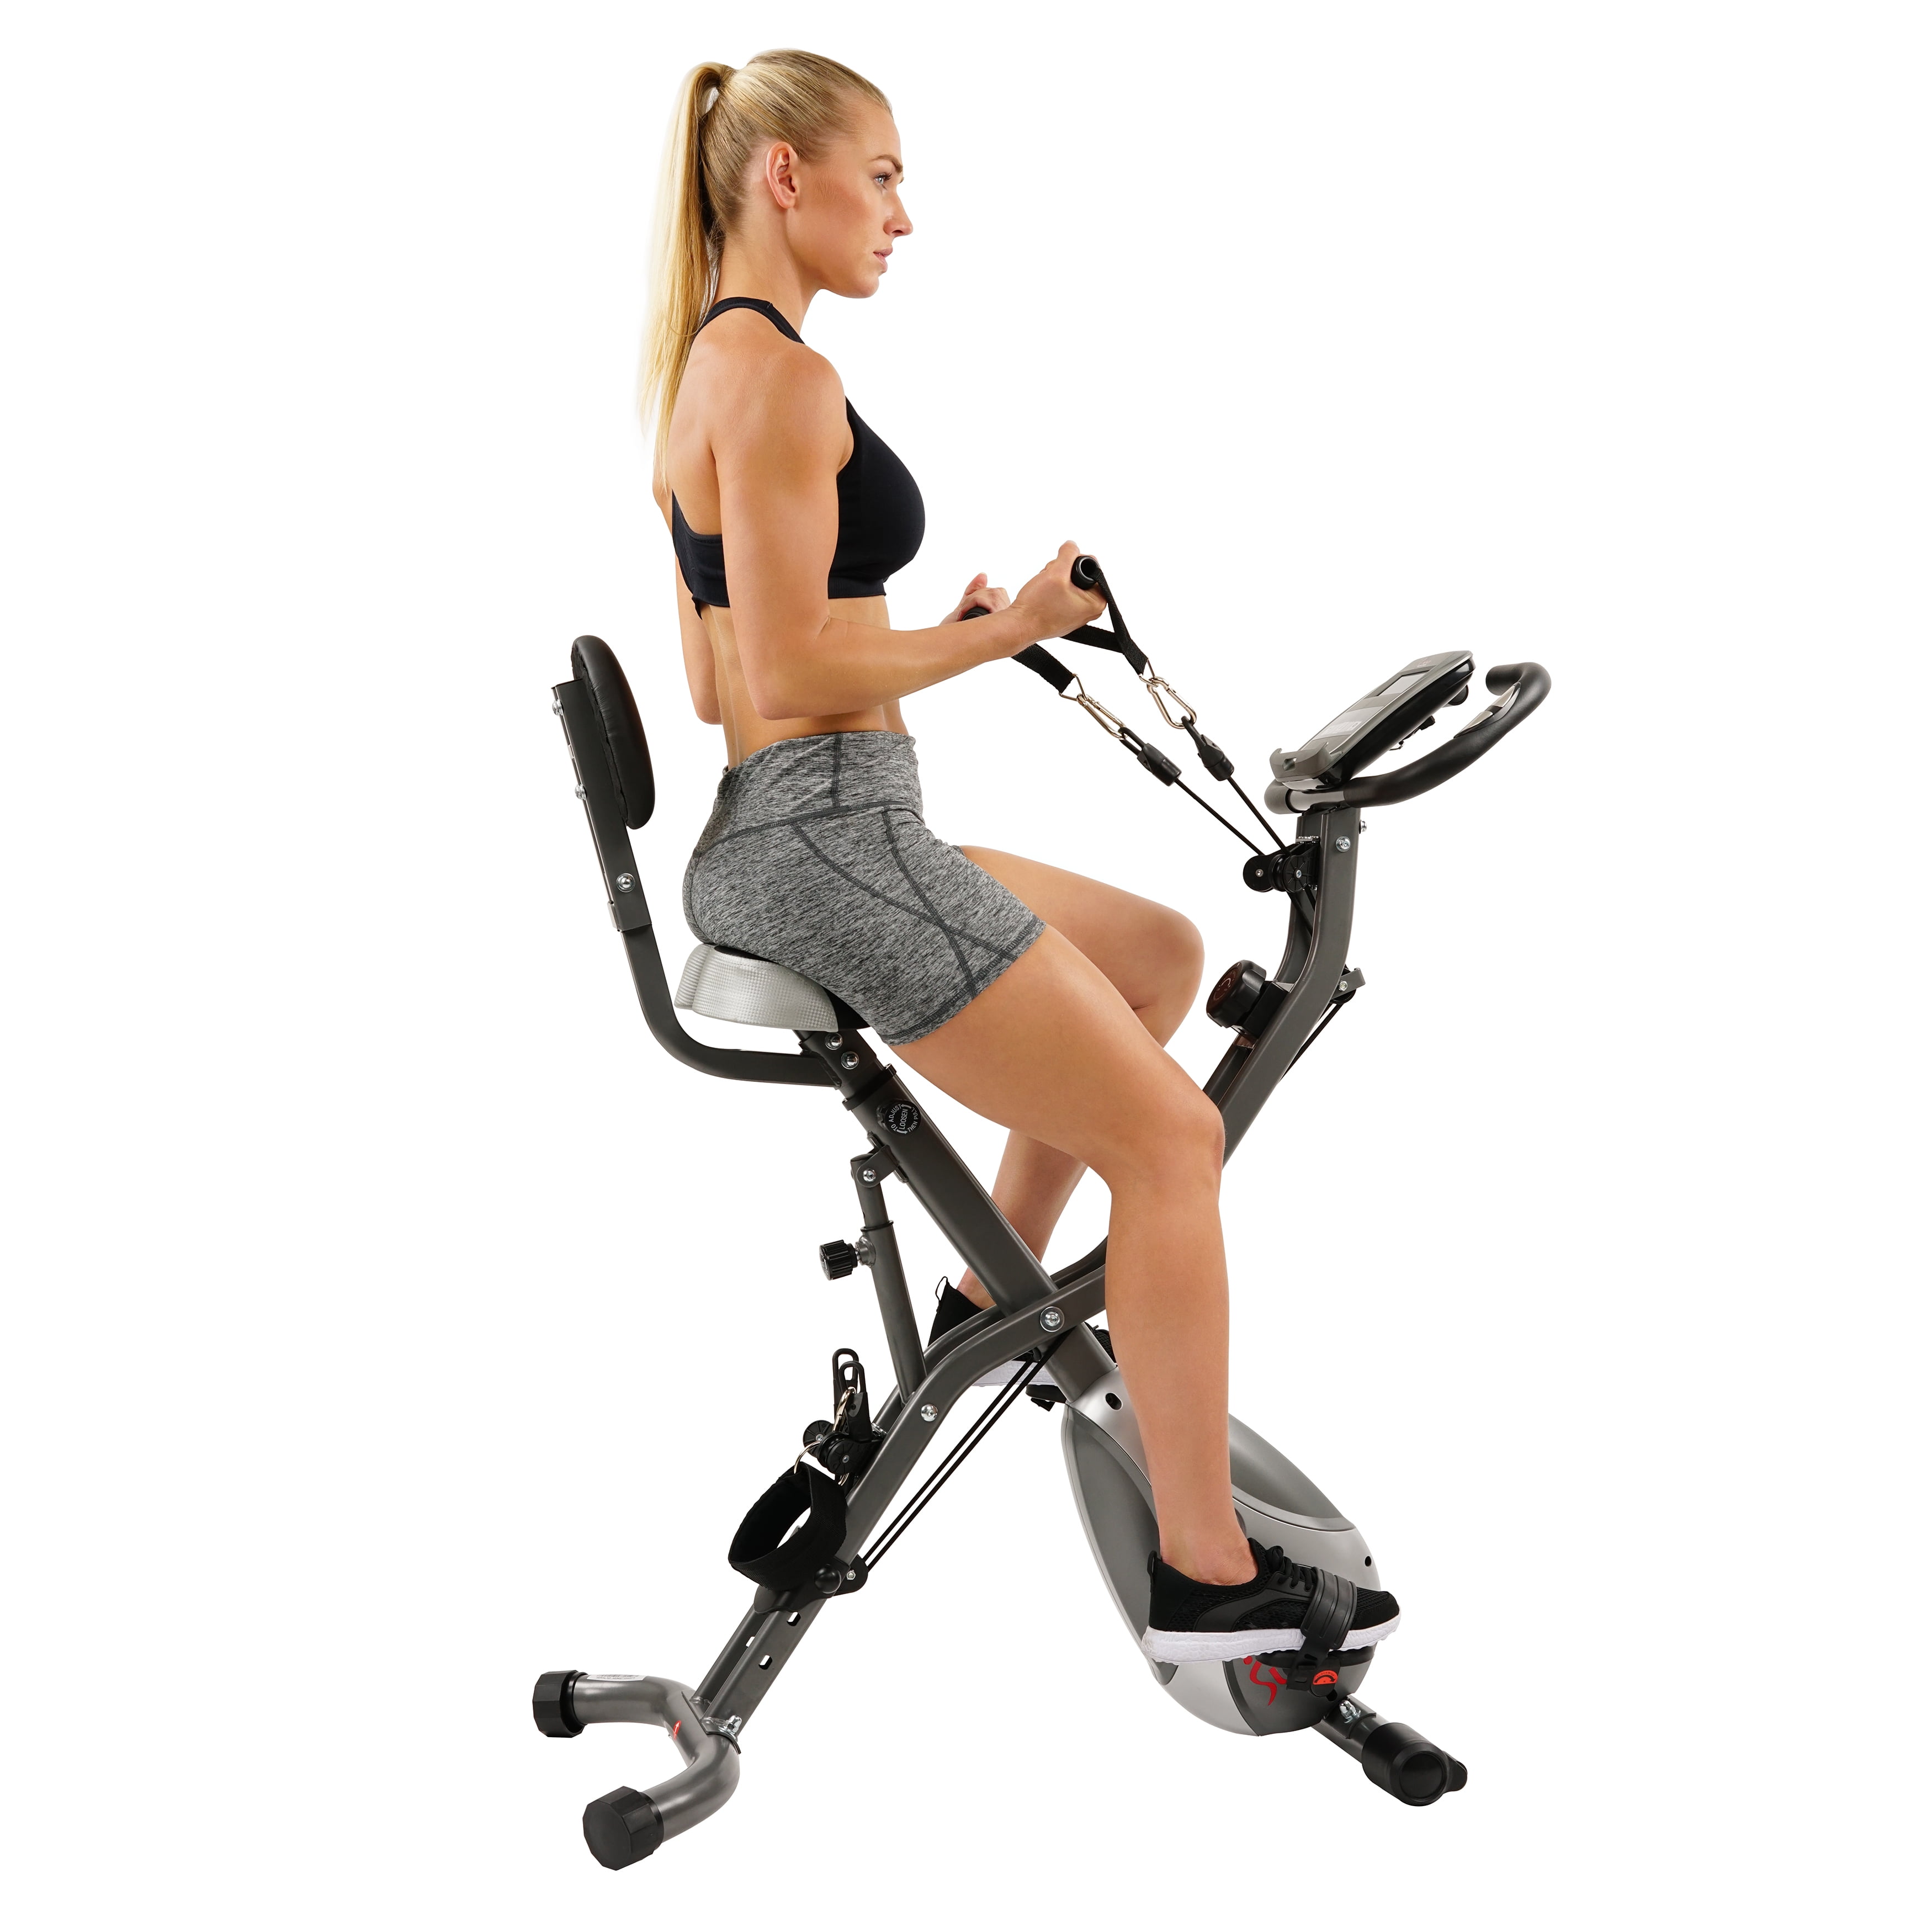 Adjustable Exercise Bike Resistance Workout Home Gym Training Arm Leg Fitness